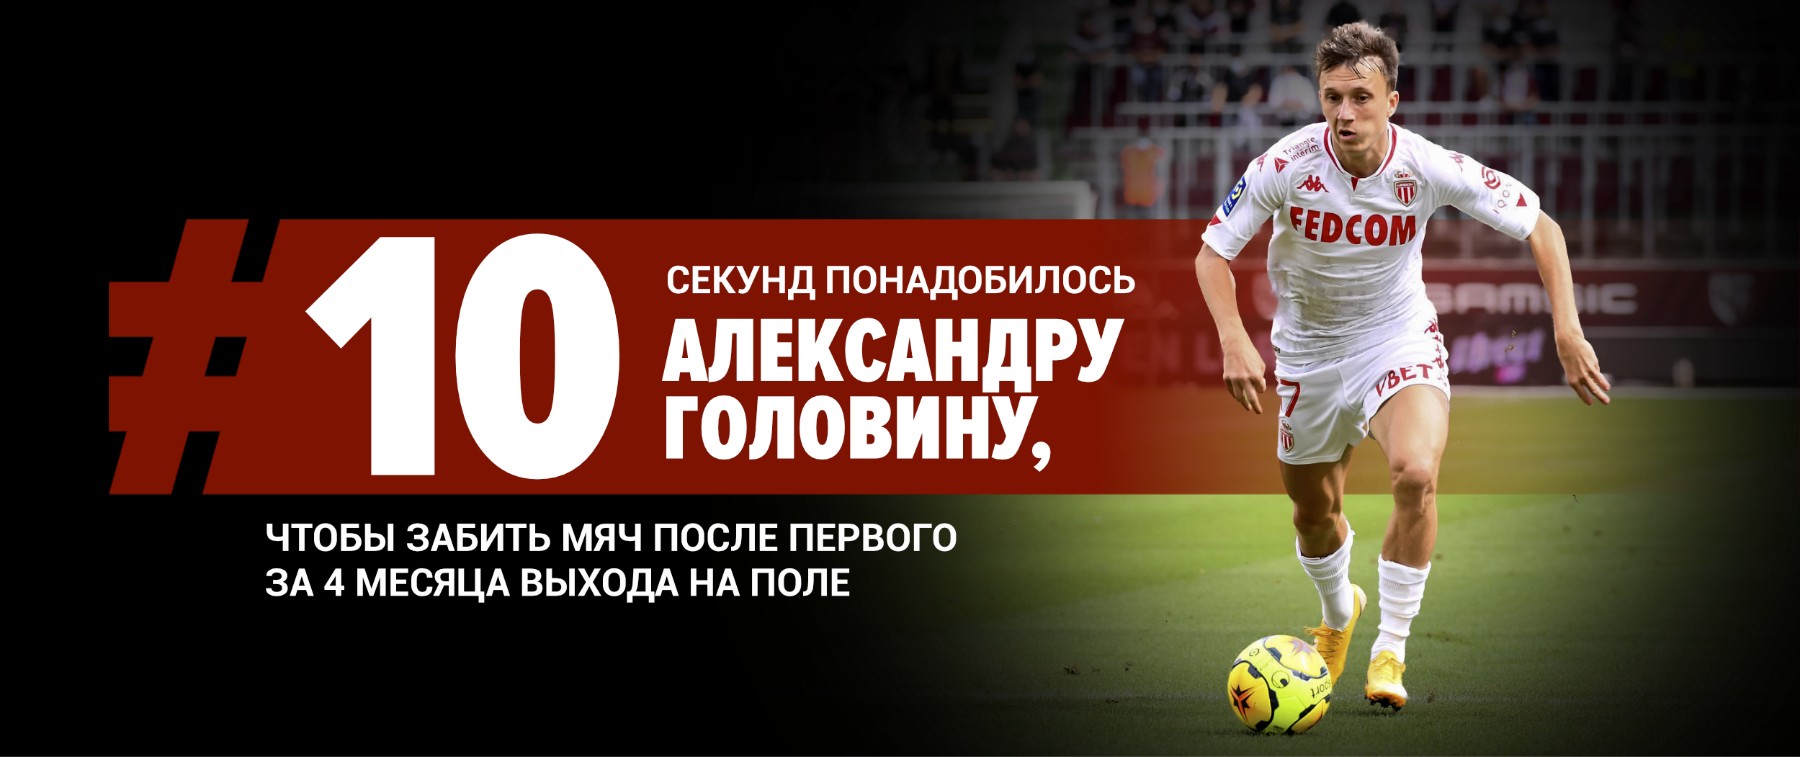 Александр Головин забил гол через 10 секунд после первого за четыре месяца выхода на поле | PPS1